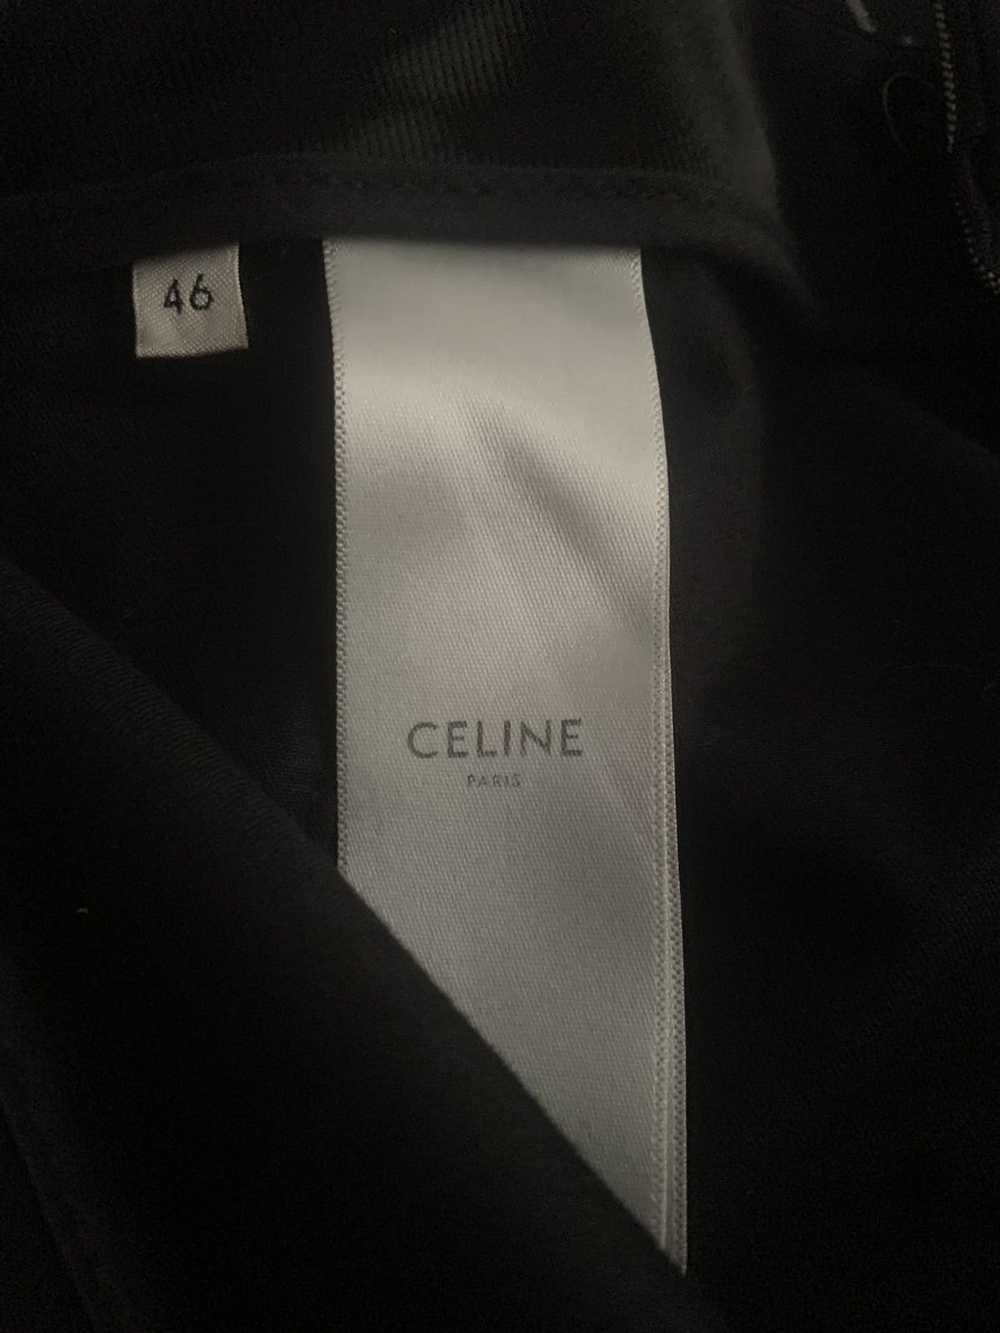 Celine Pinstripe Suit - image 6